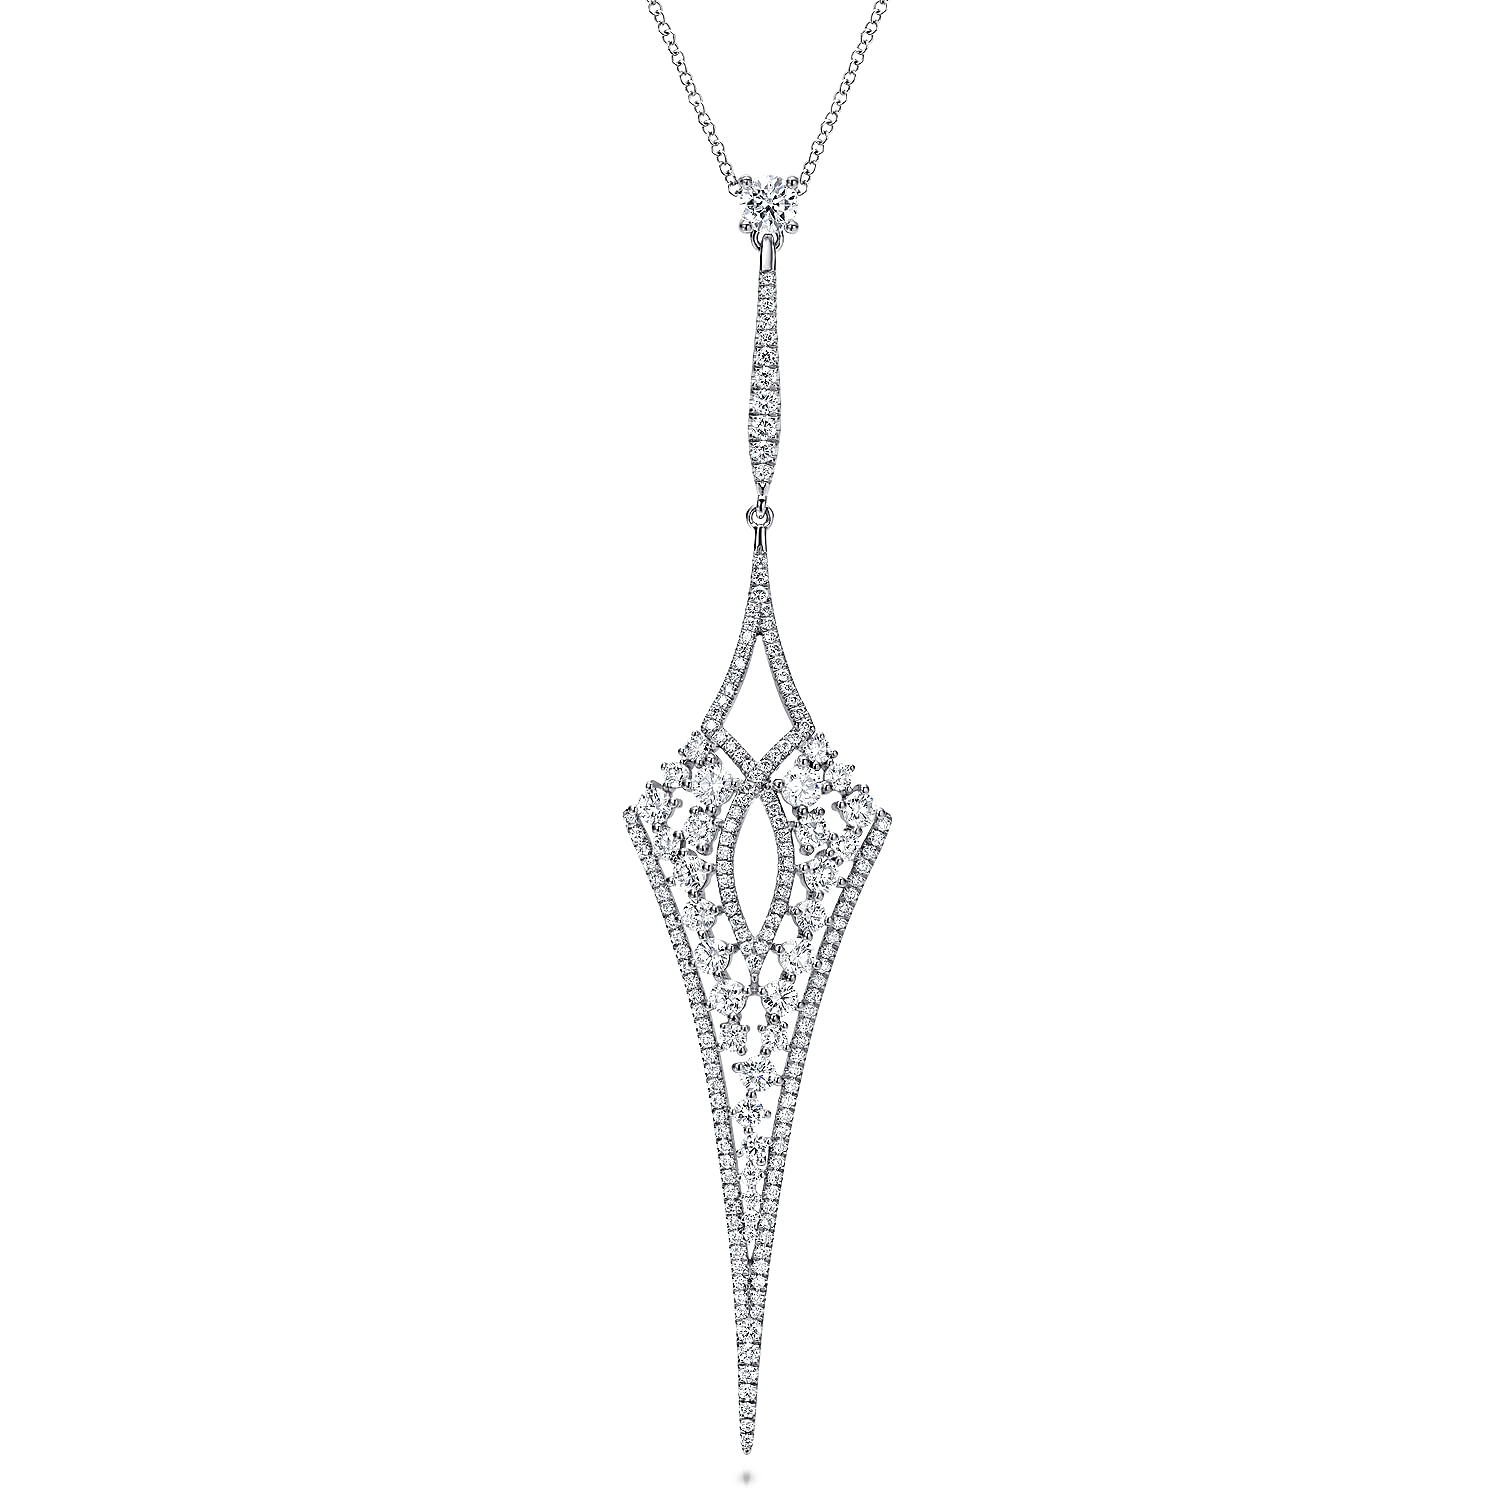 18K White Gold Long Diamond Kite Shaped Pendant Necklace